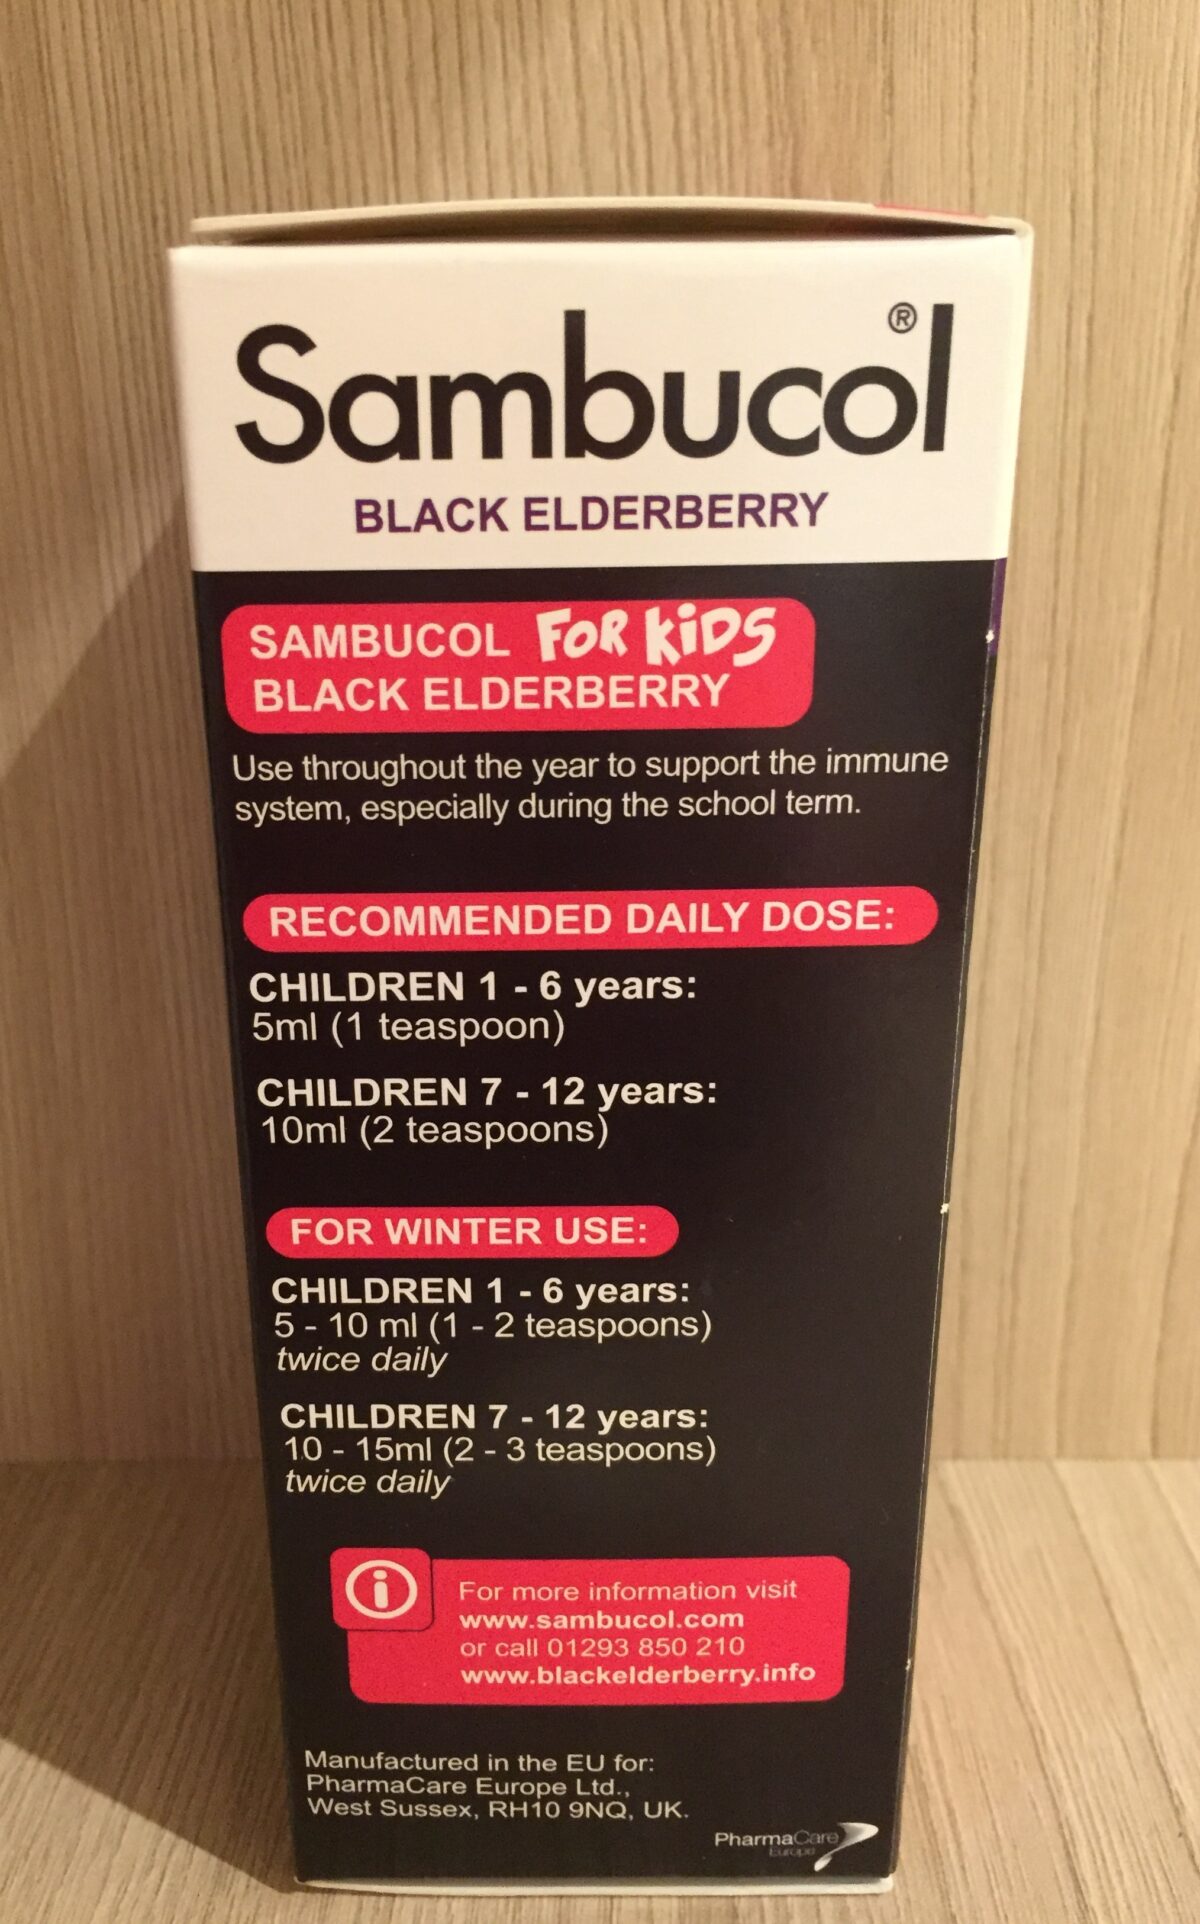 SAMBUCOL BLACK ELDERBERRY LIQUID FOR KIDS